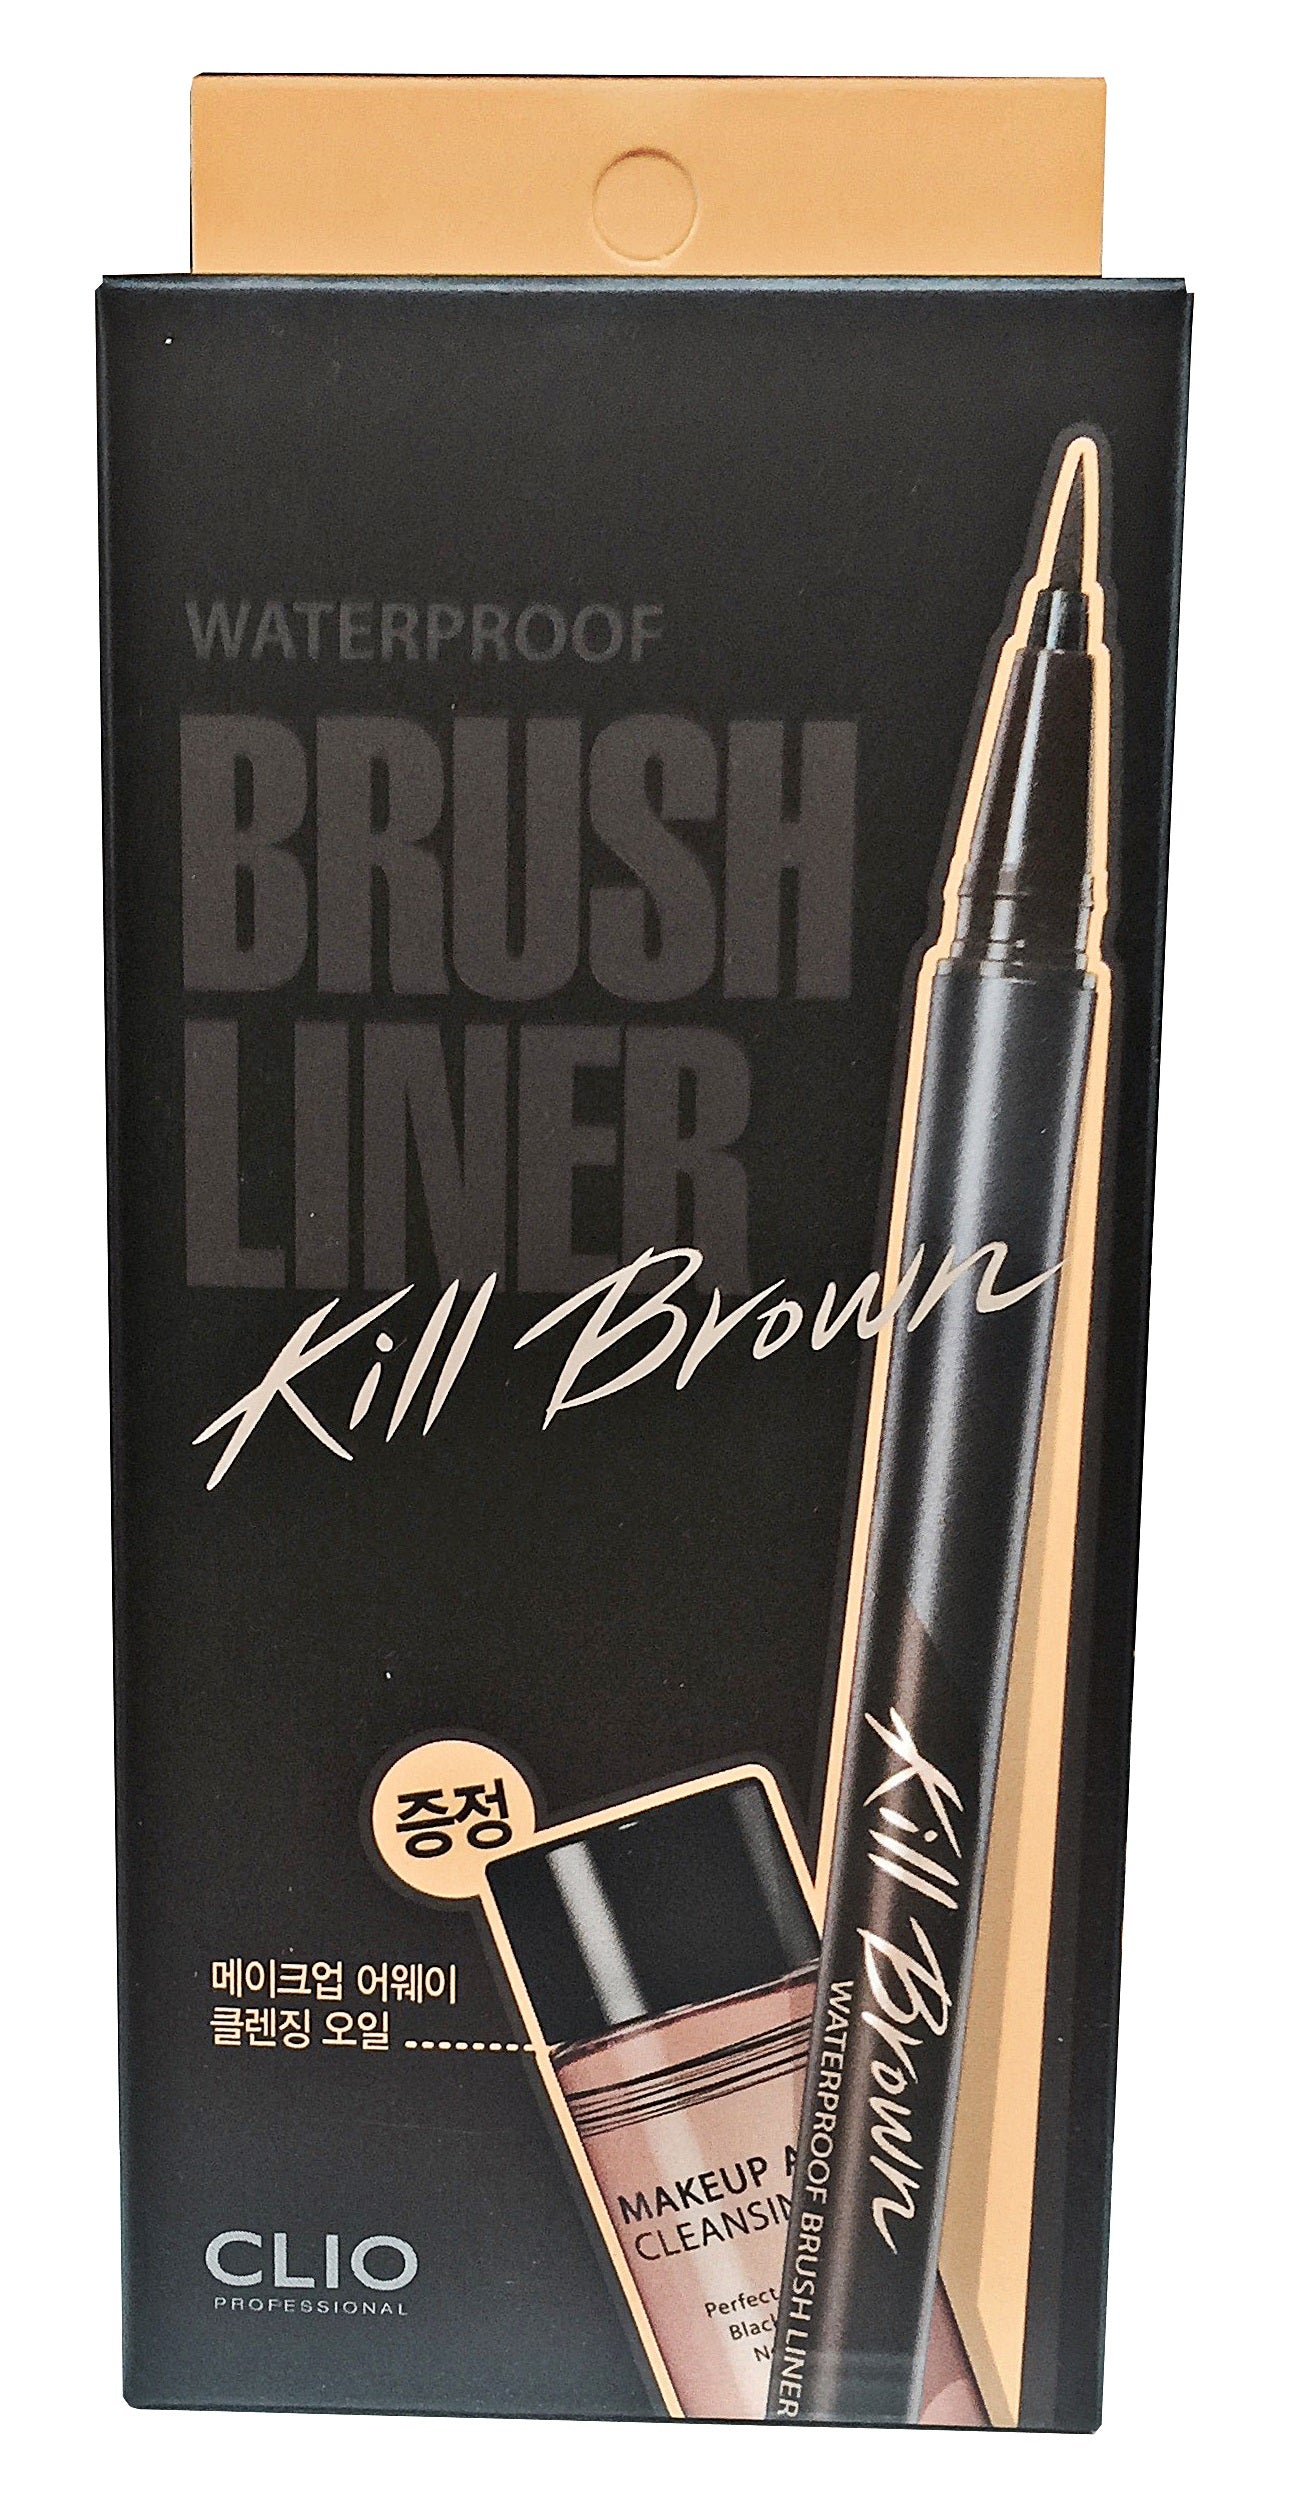 Clio Waterproof Brush Liner Makeup Away Cleansing Oil Sets Kits - Kill Brown